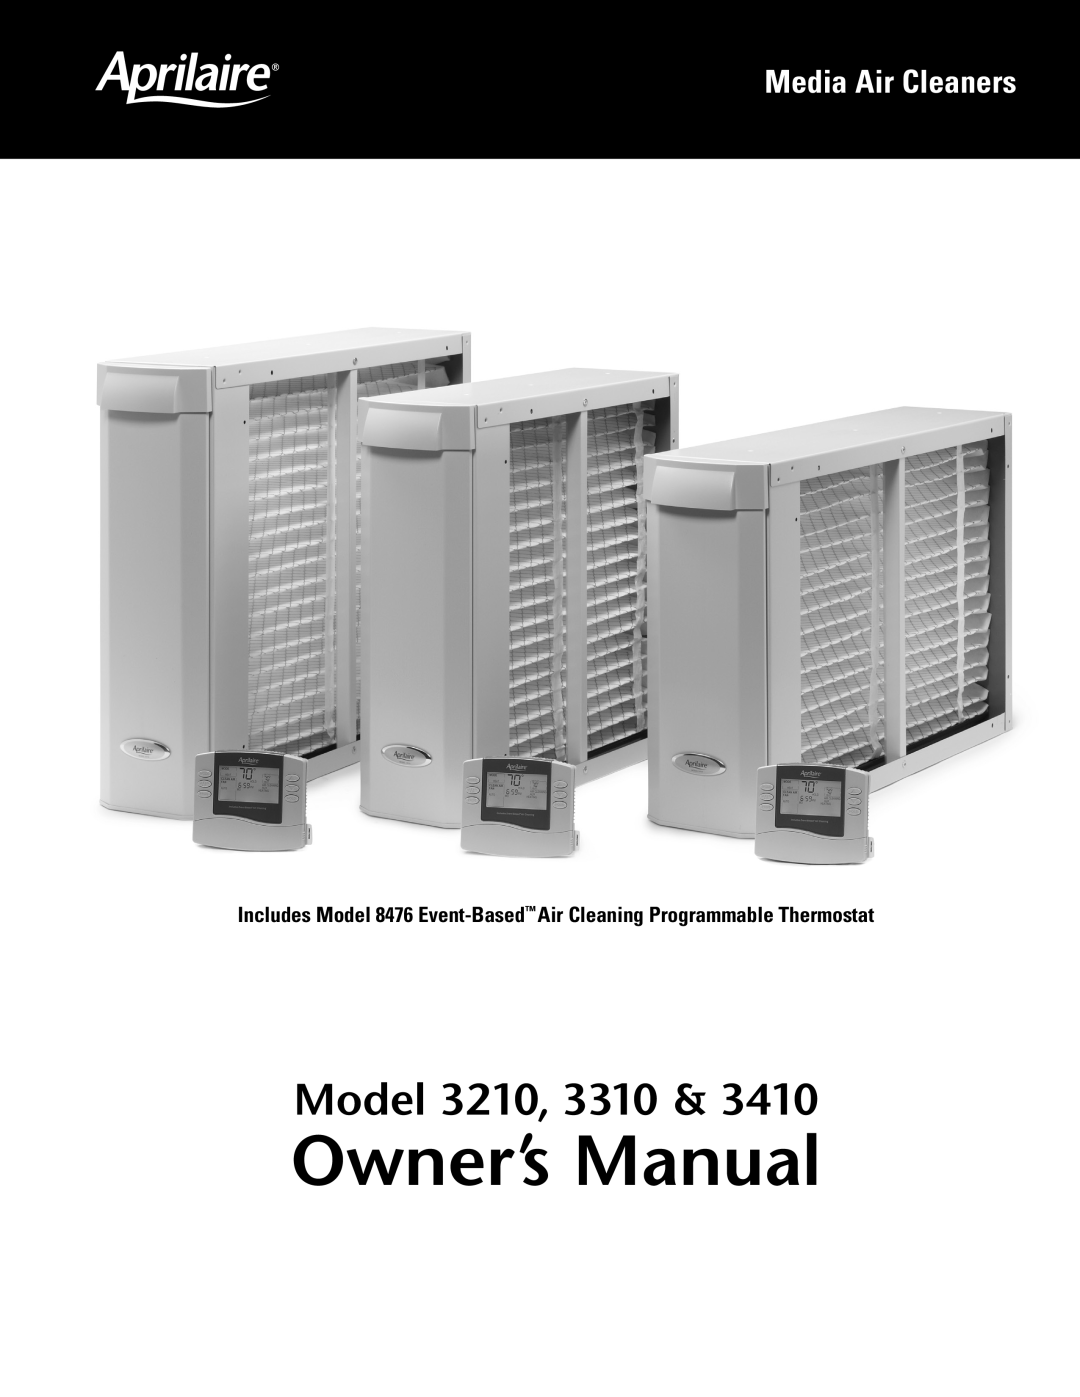 Aprilaire 3310, 3410, 3210 owner manual Model, Media Air Cleaners 